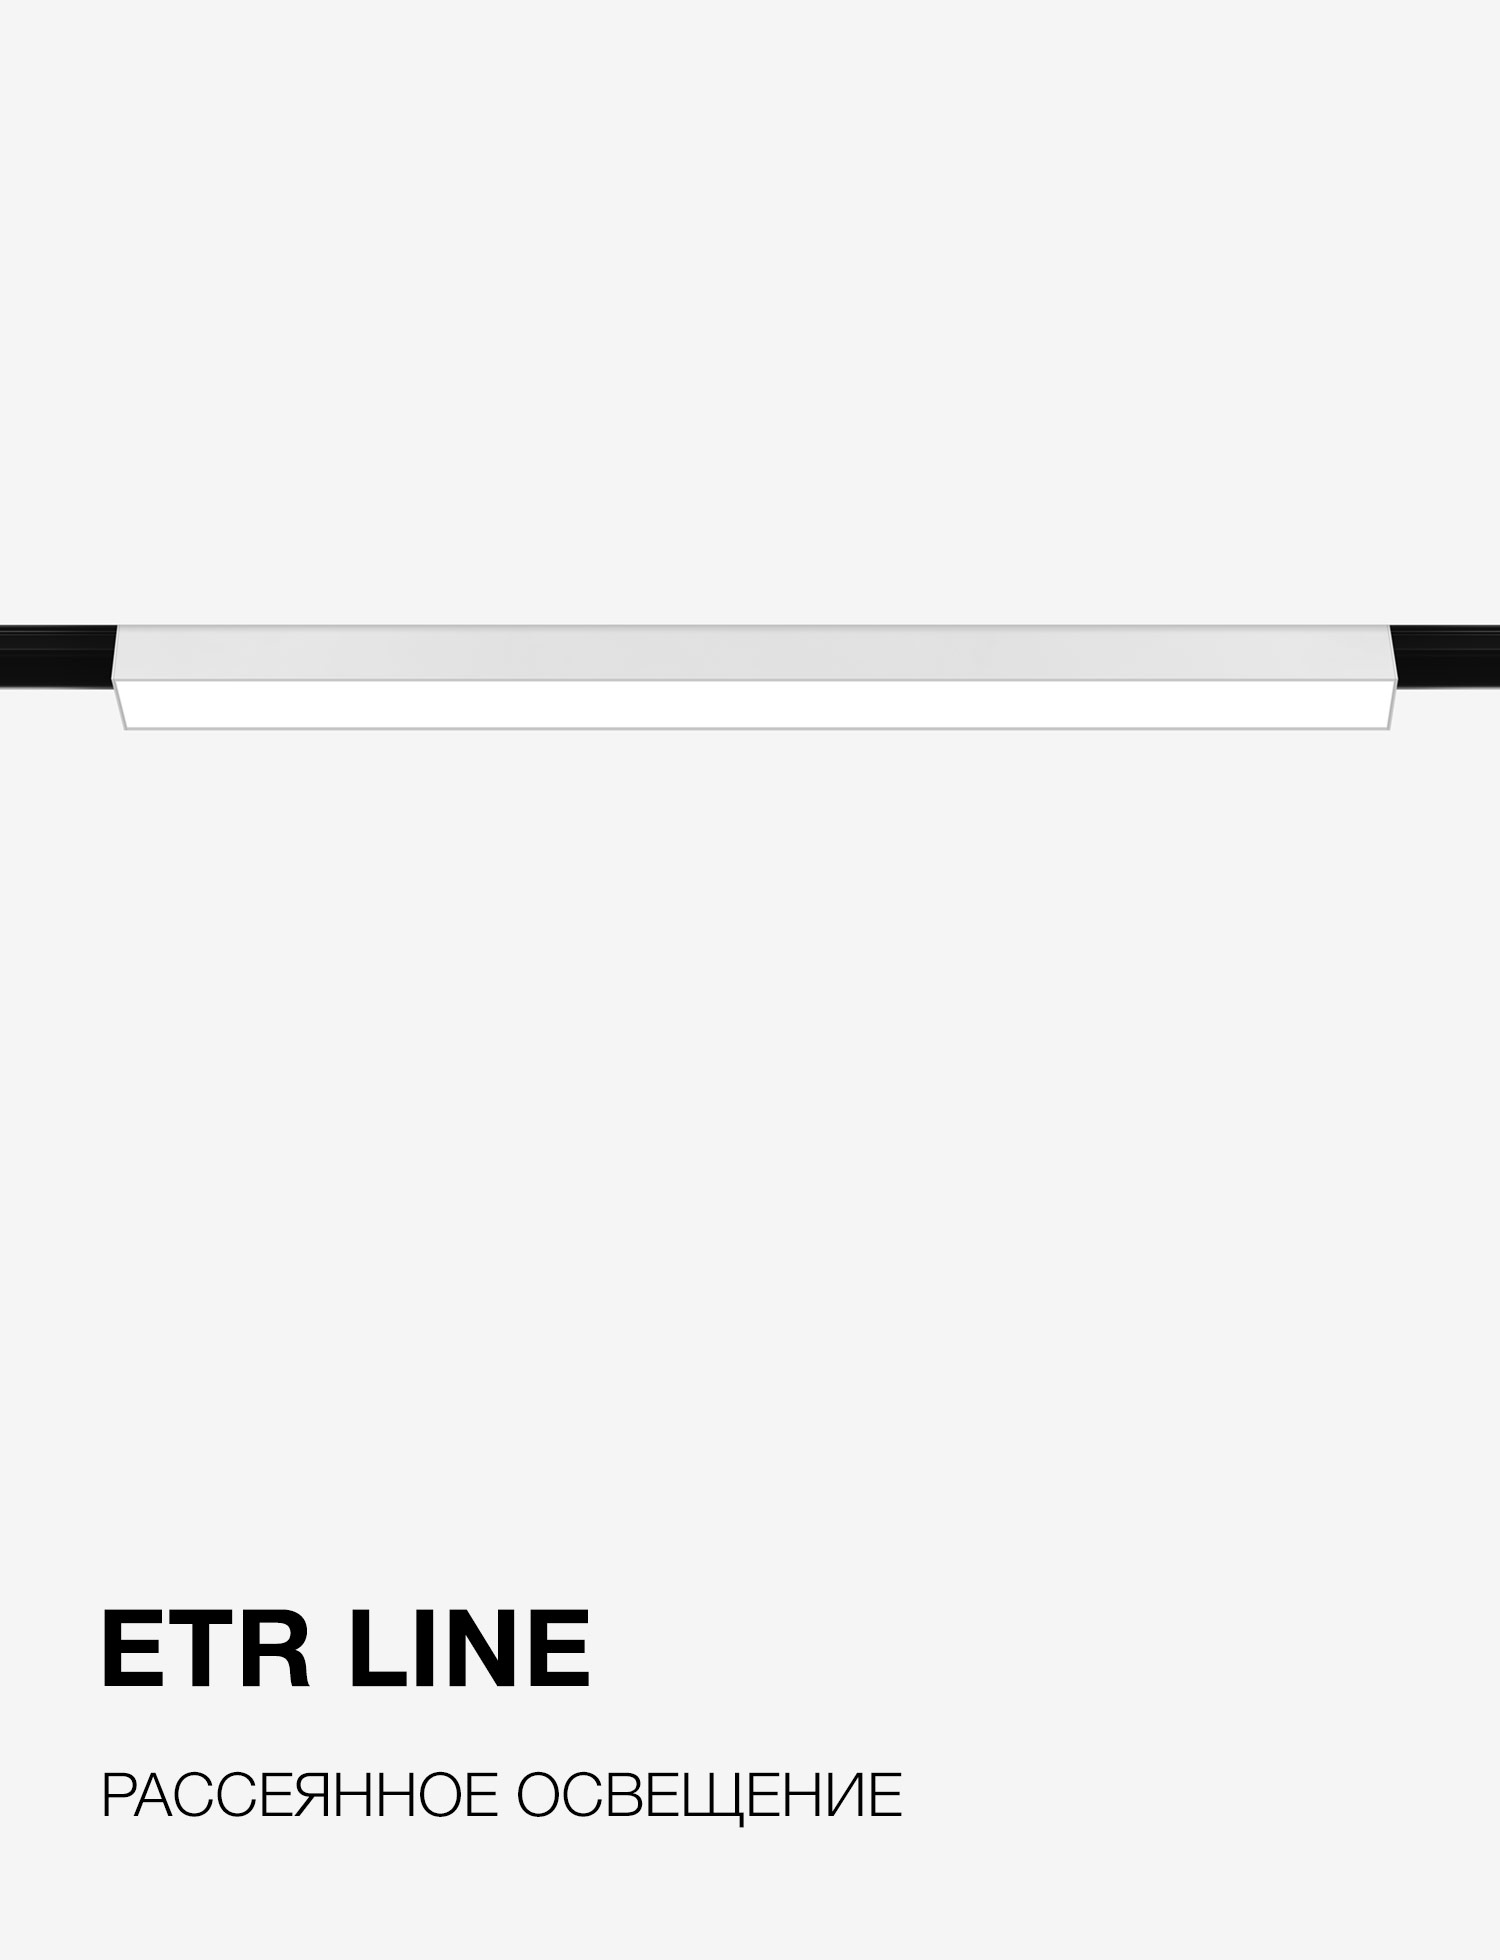 ETR LINE